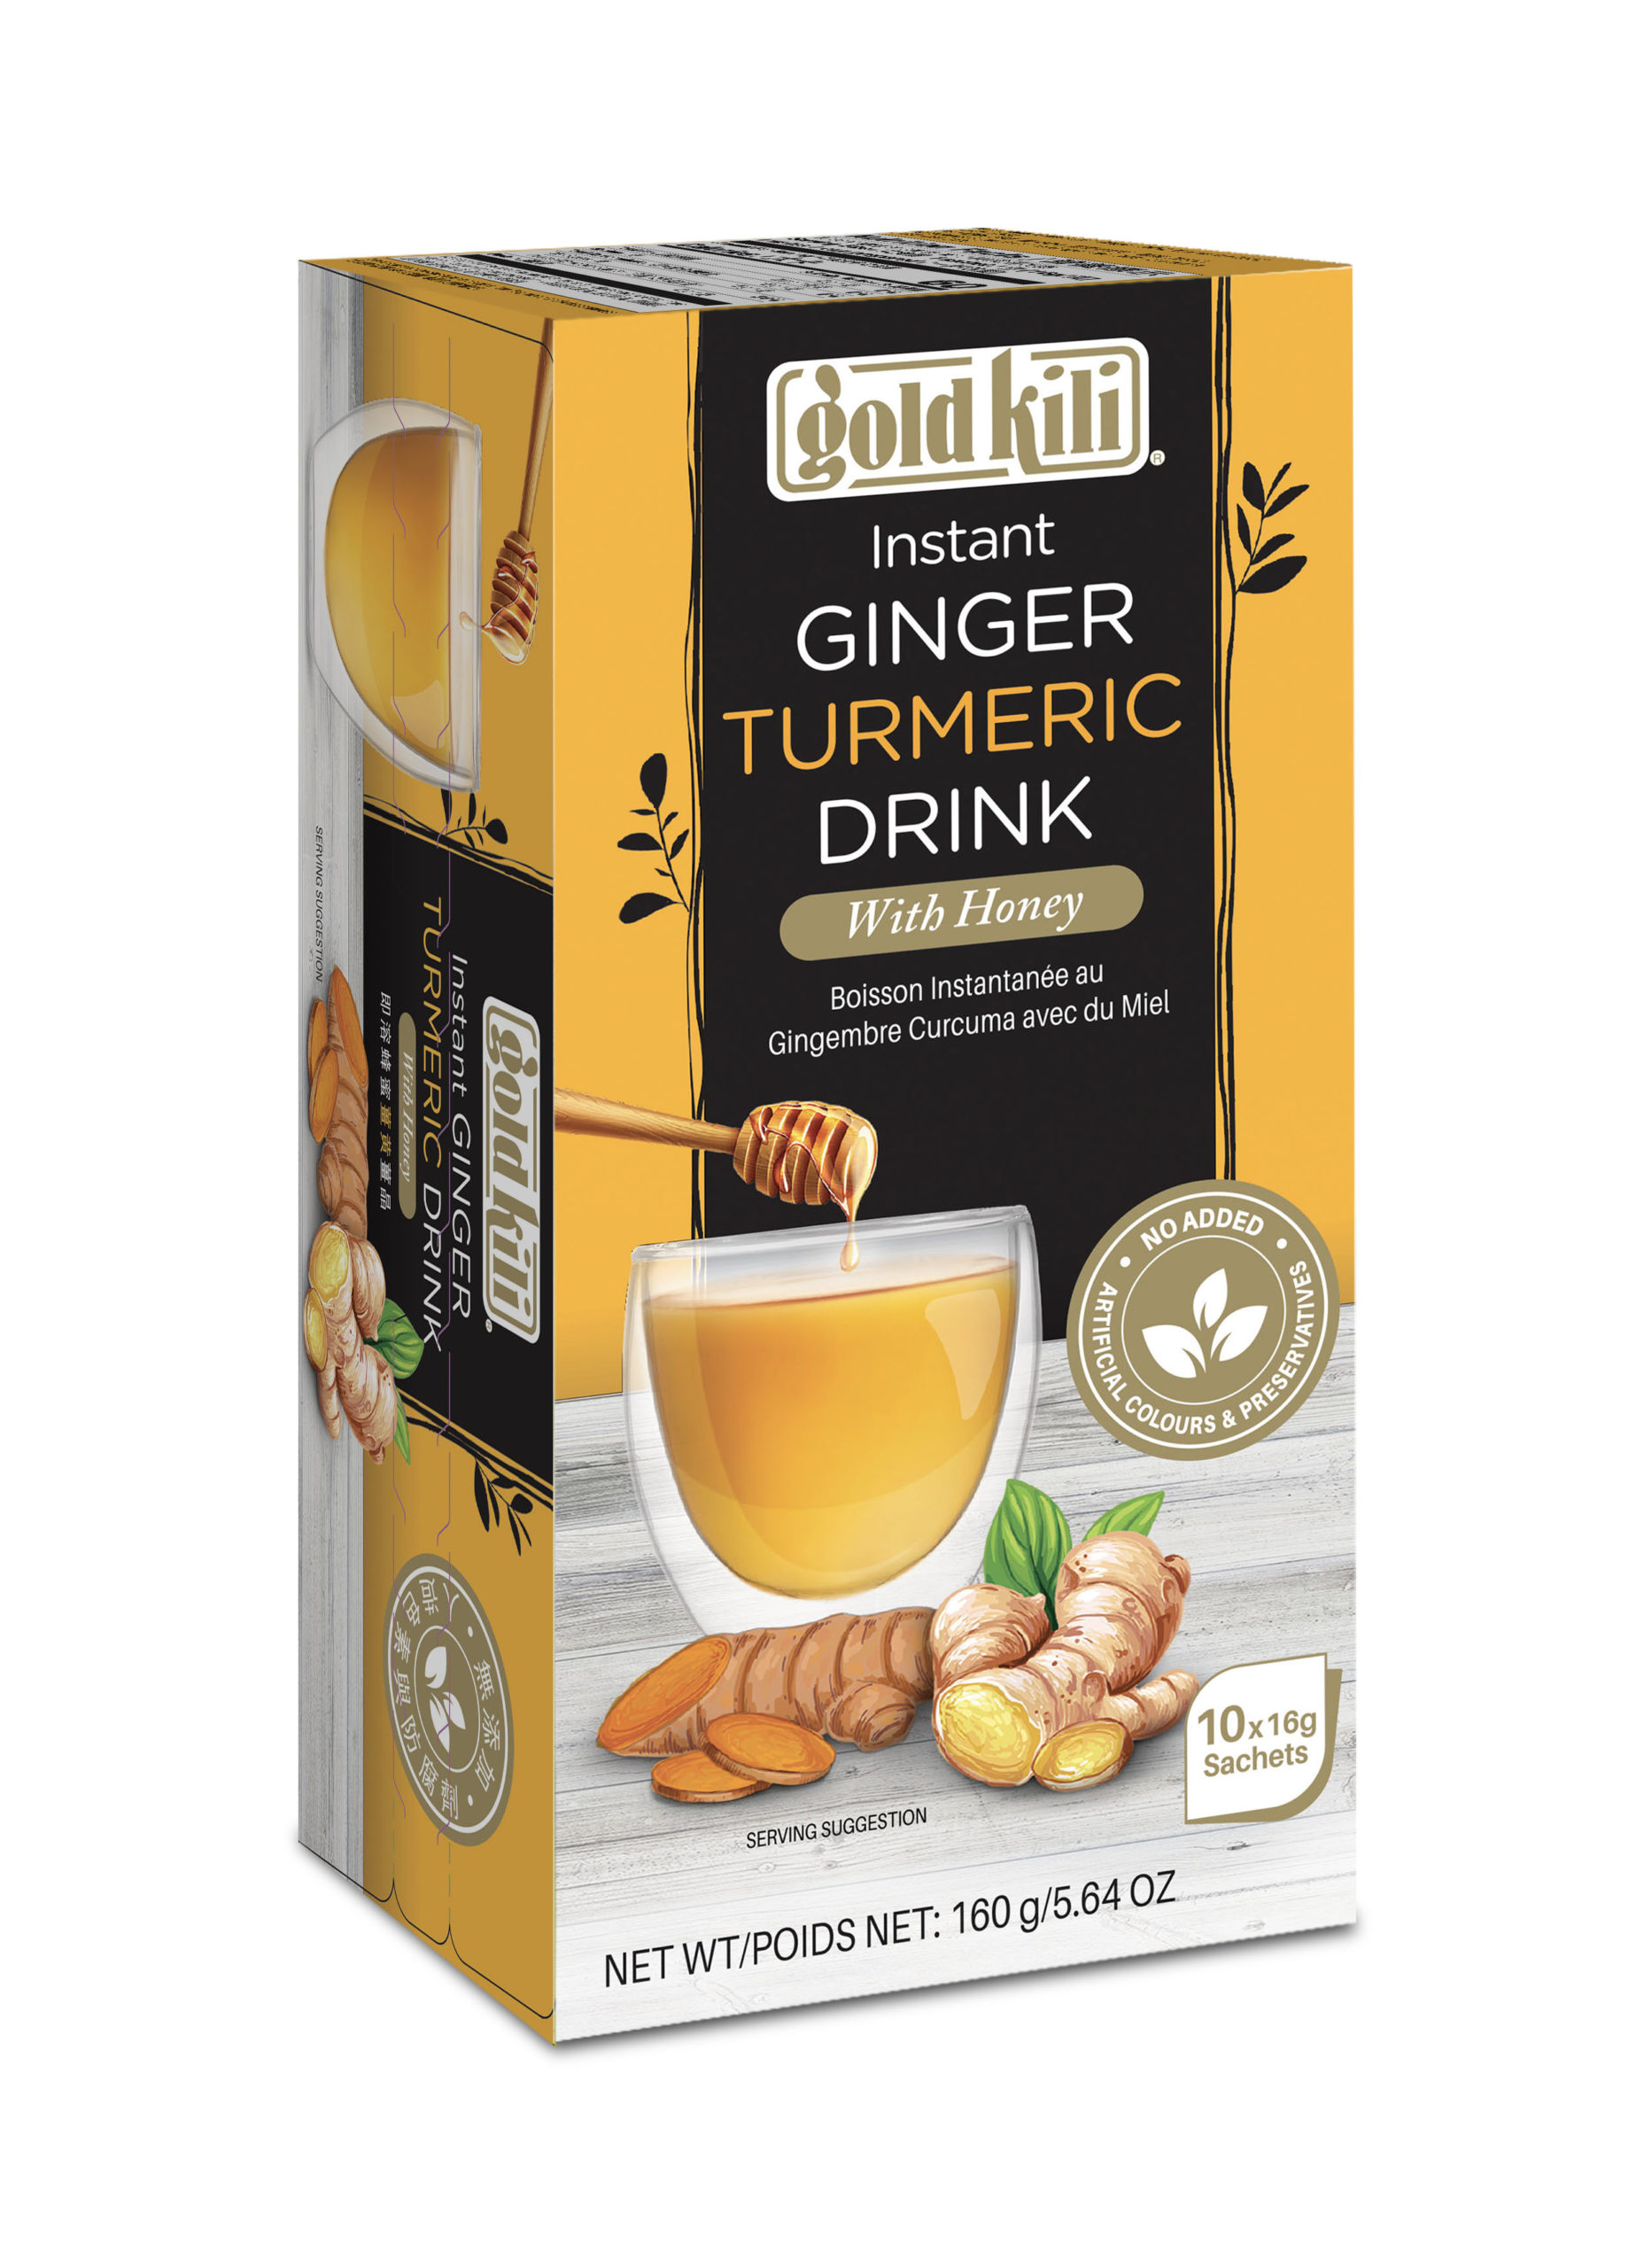 Bundle Of Gold Kili Instant Ginger Turmeric Drink With Honey